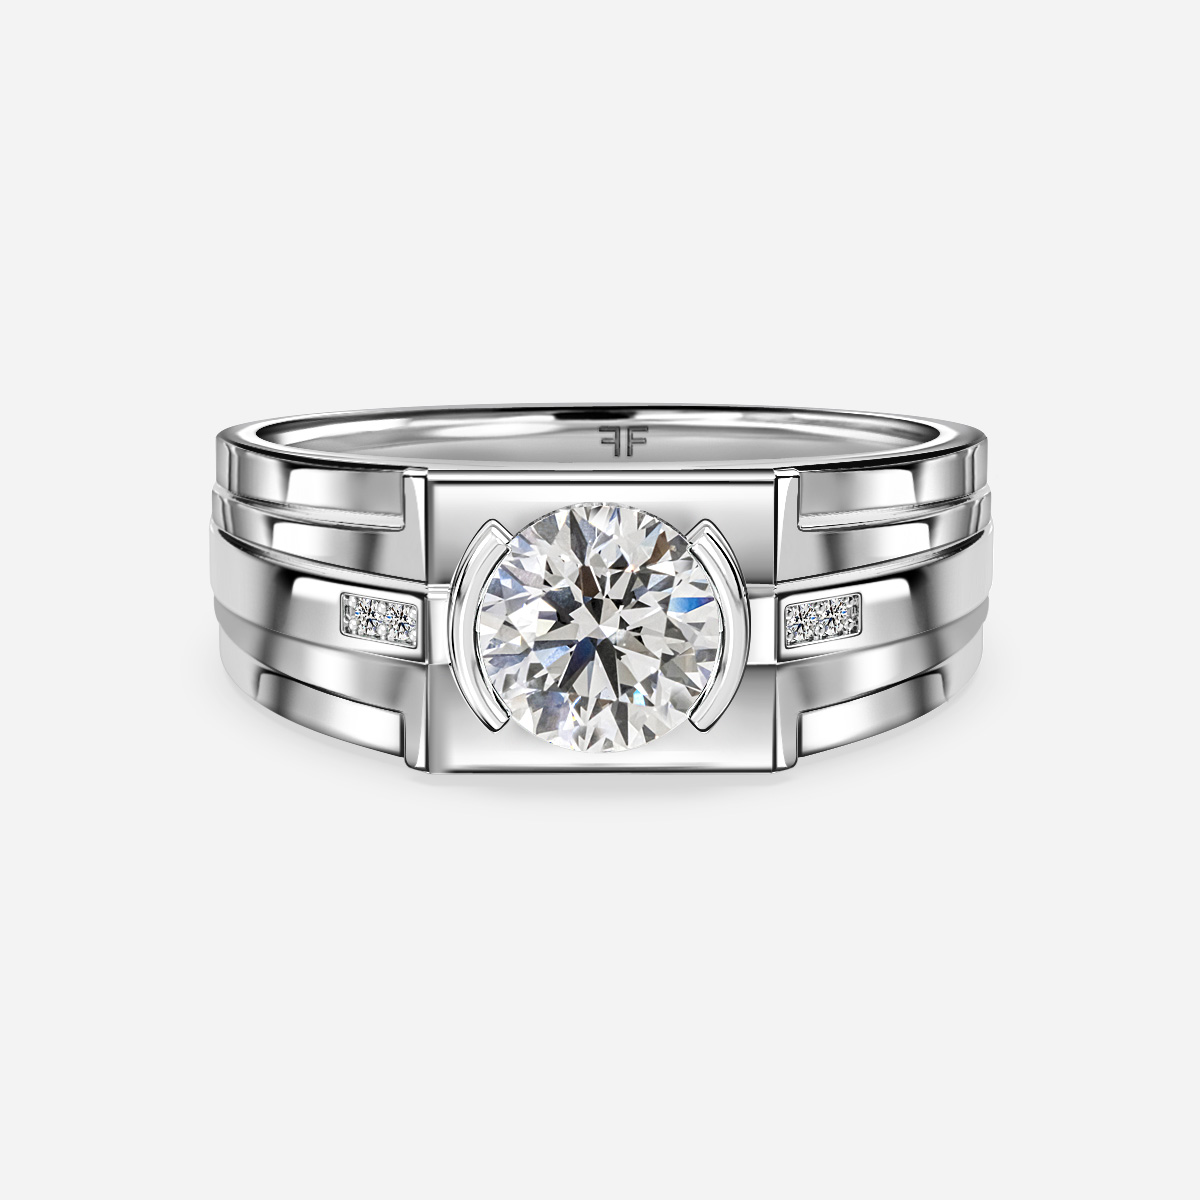 Bernard Platinum Men's Bezel Set Engagement Ring